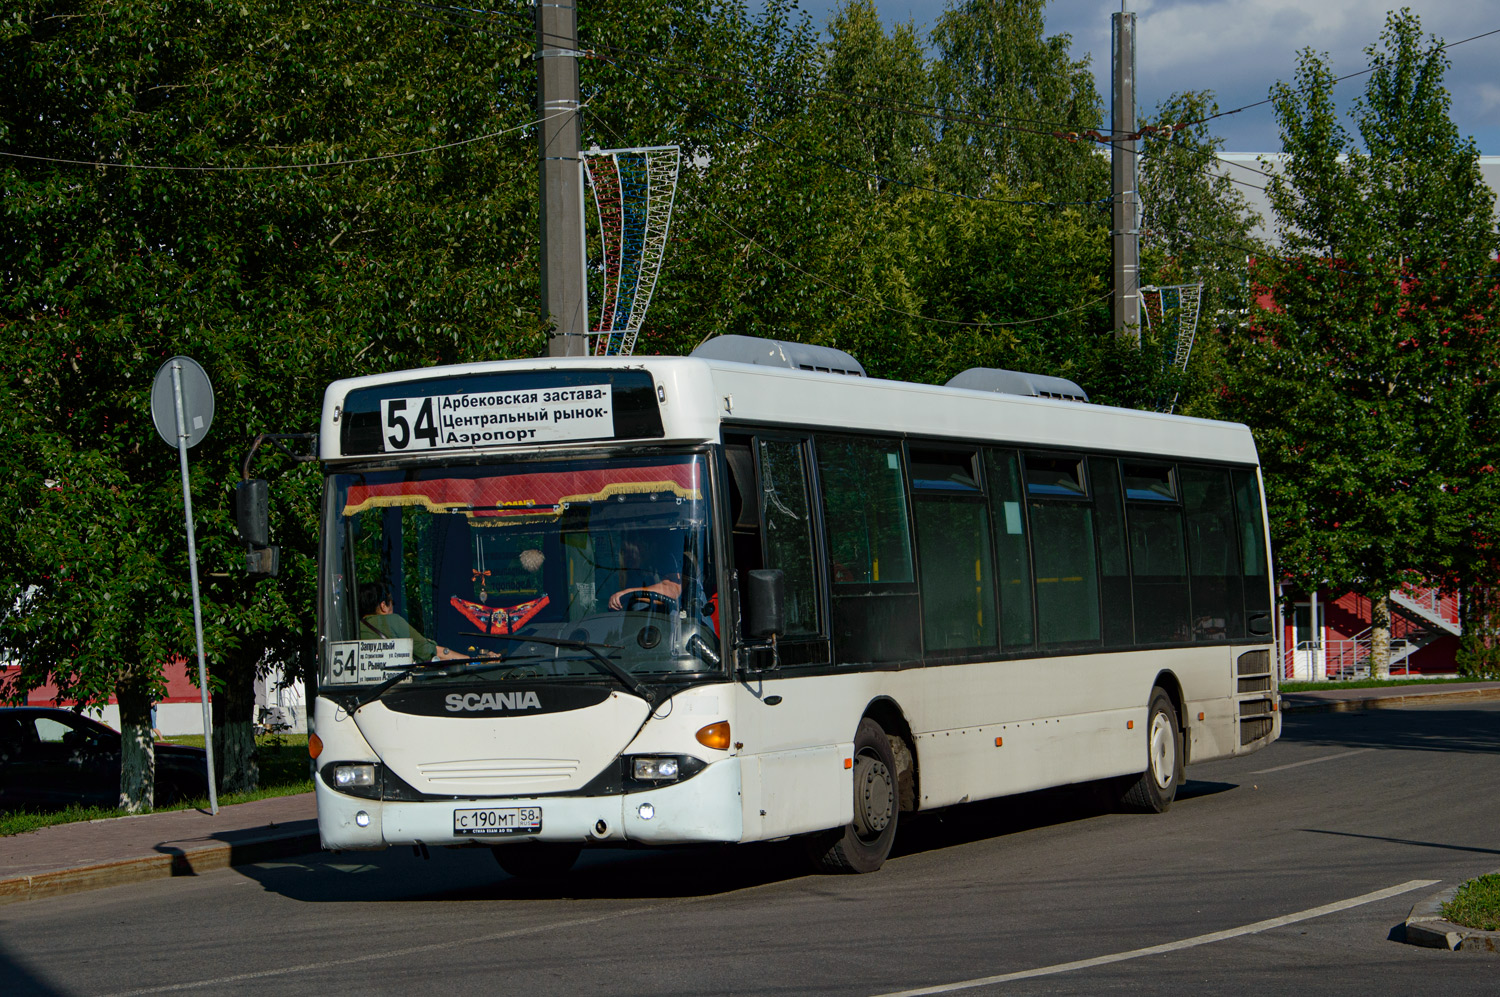 Penza region, Scania OmniLink I (Scania-St.Petersburg) № С 190 МТ 58